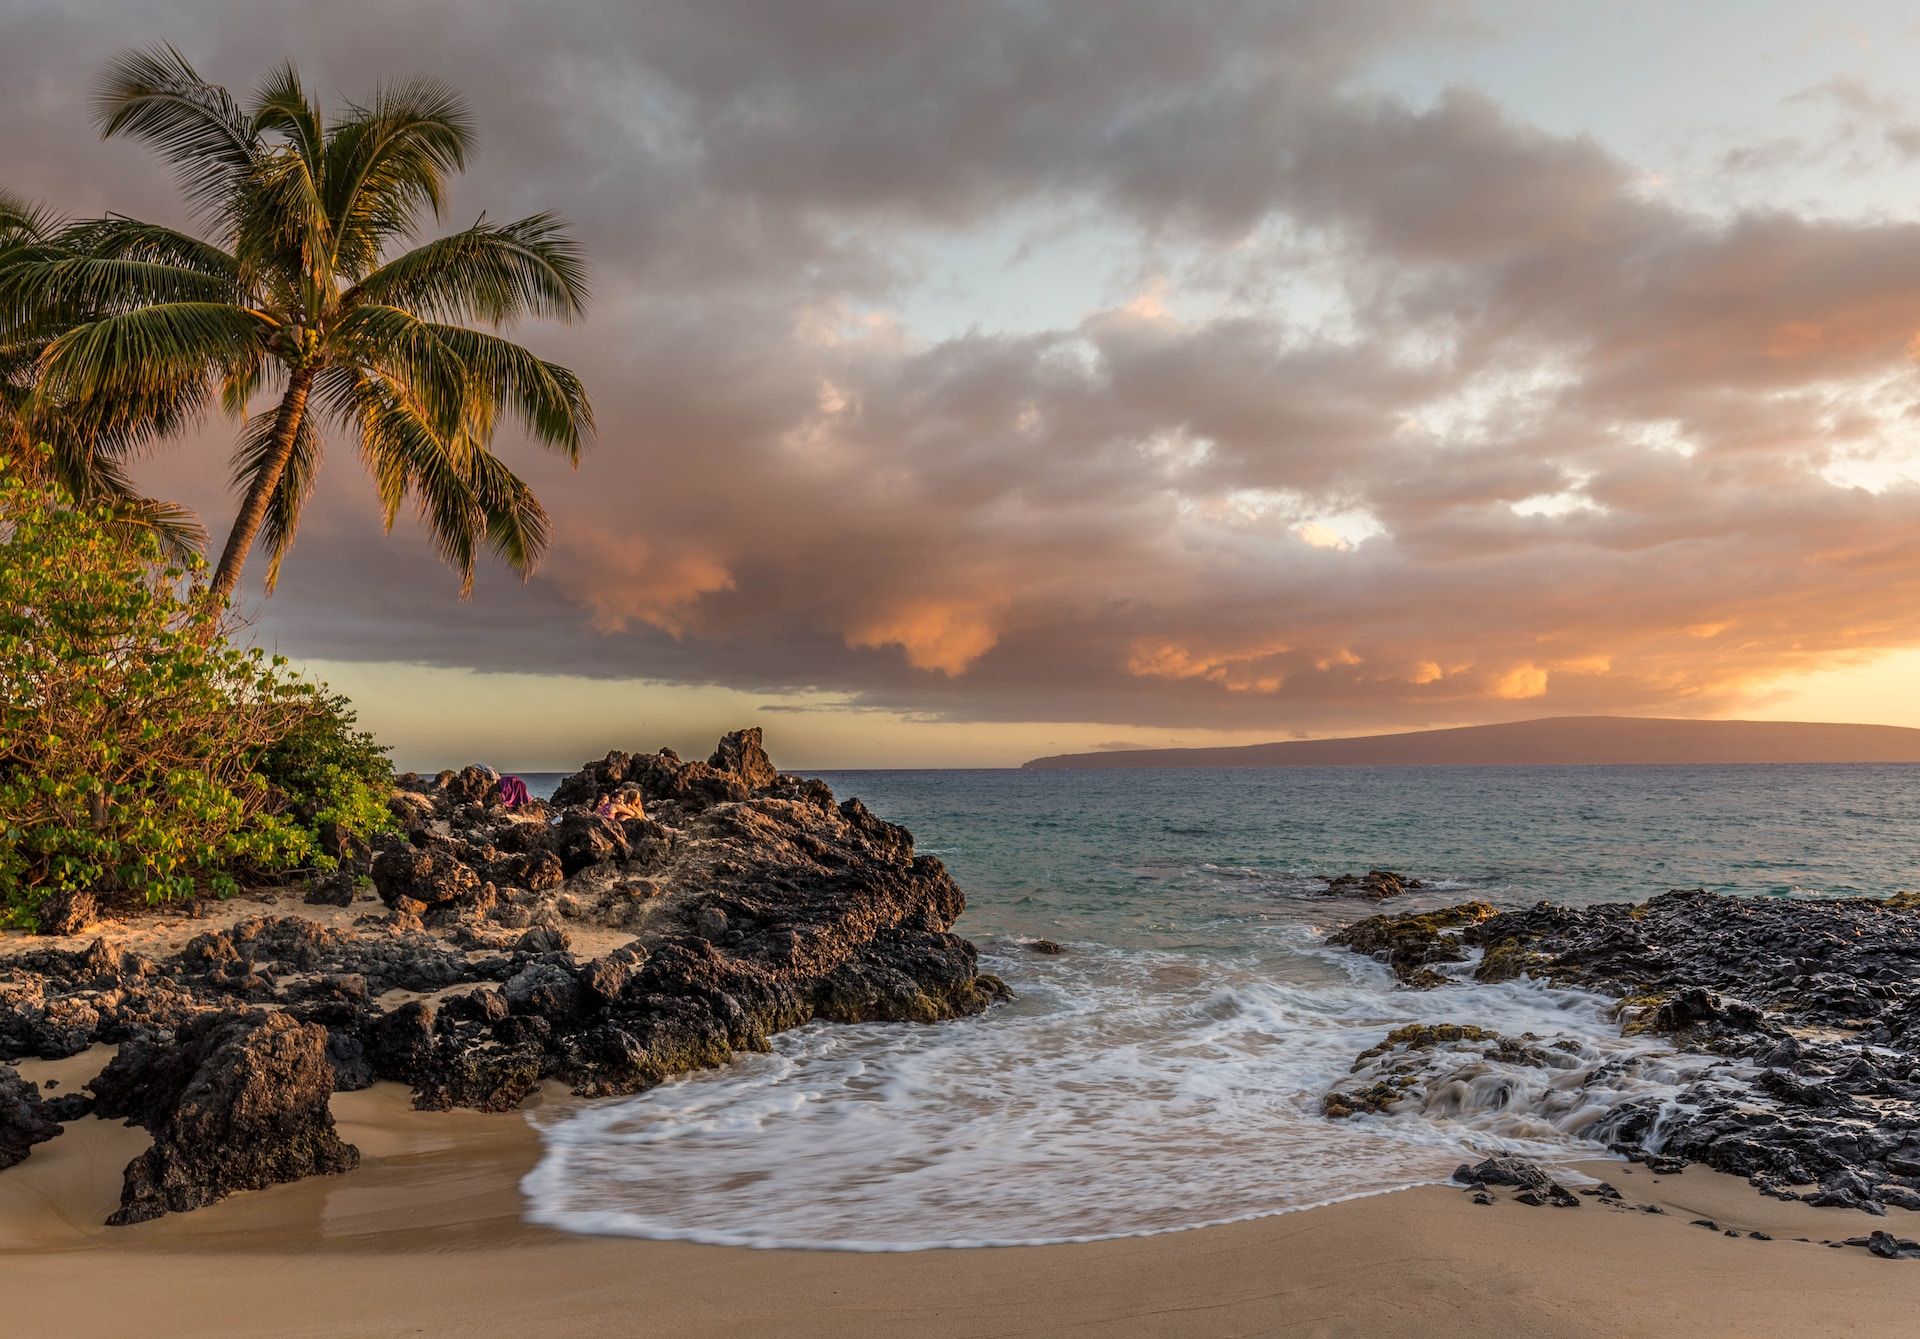 Sunset at a beach in Kihei, Hawaii